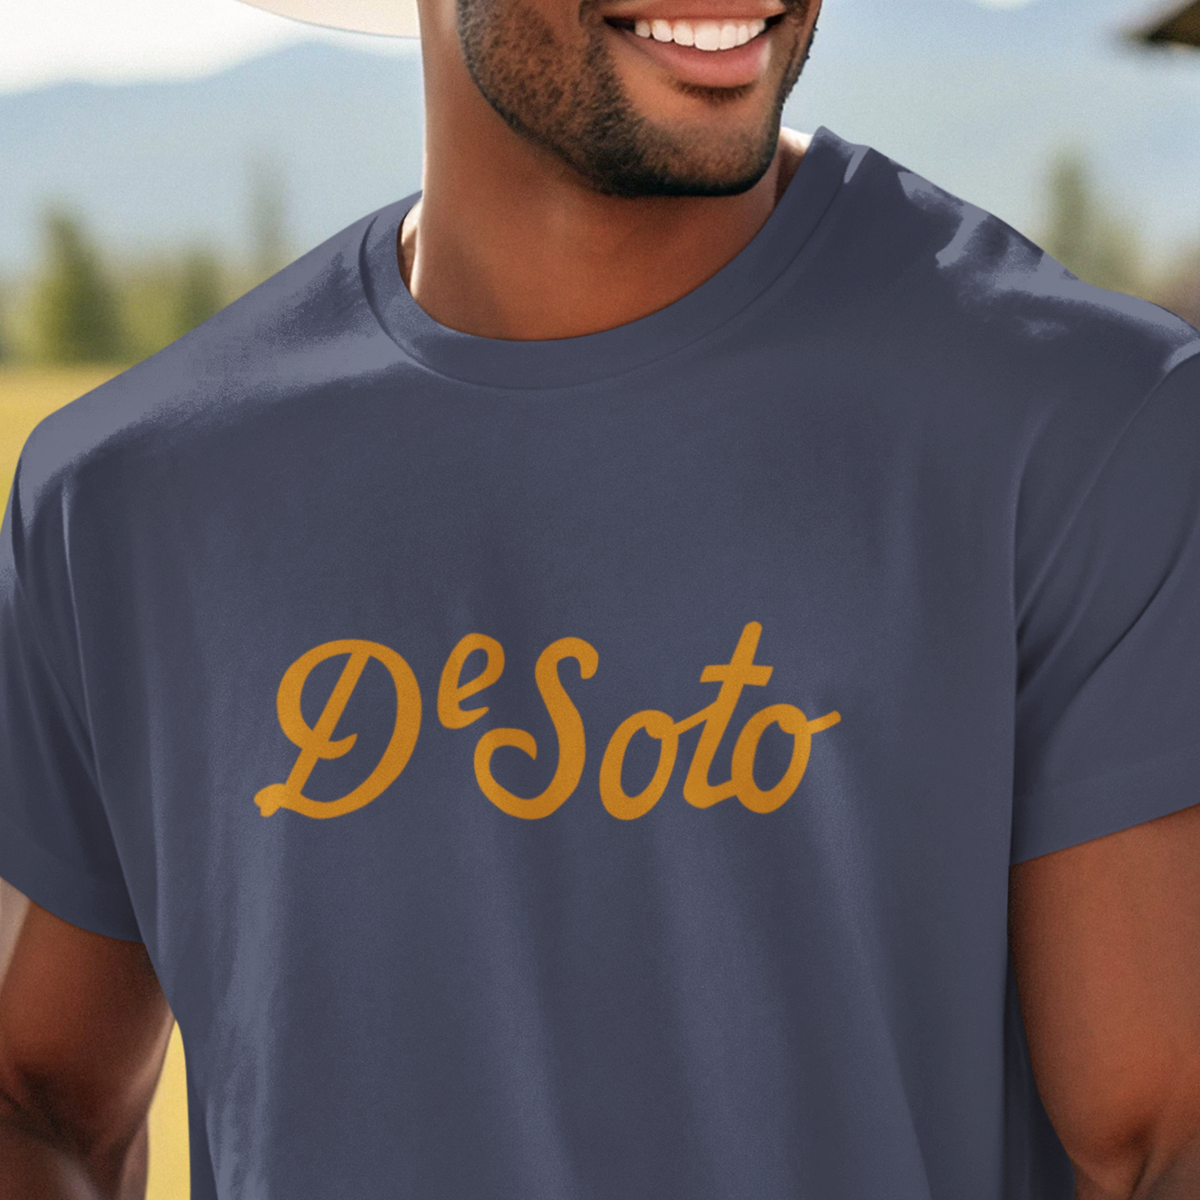 DeSoto t shirt